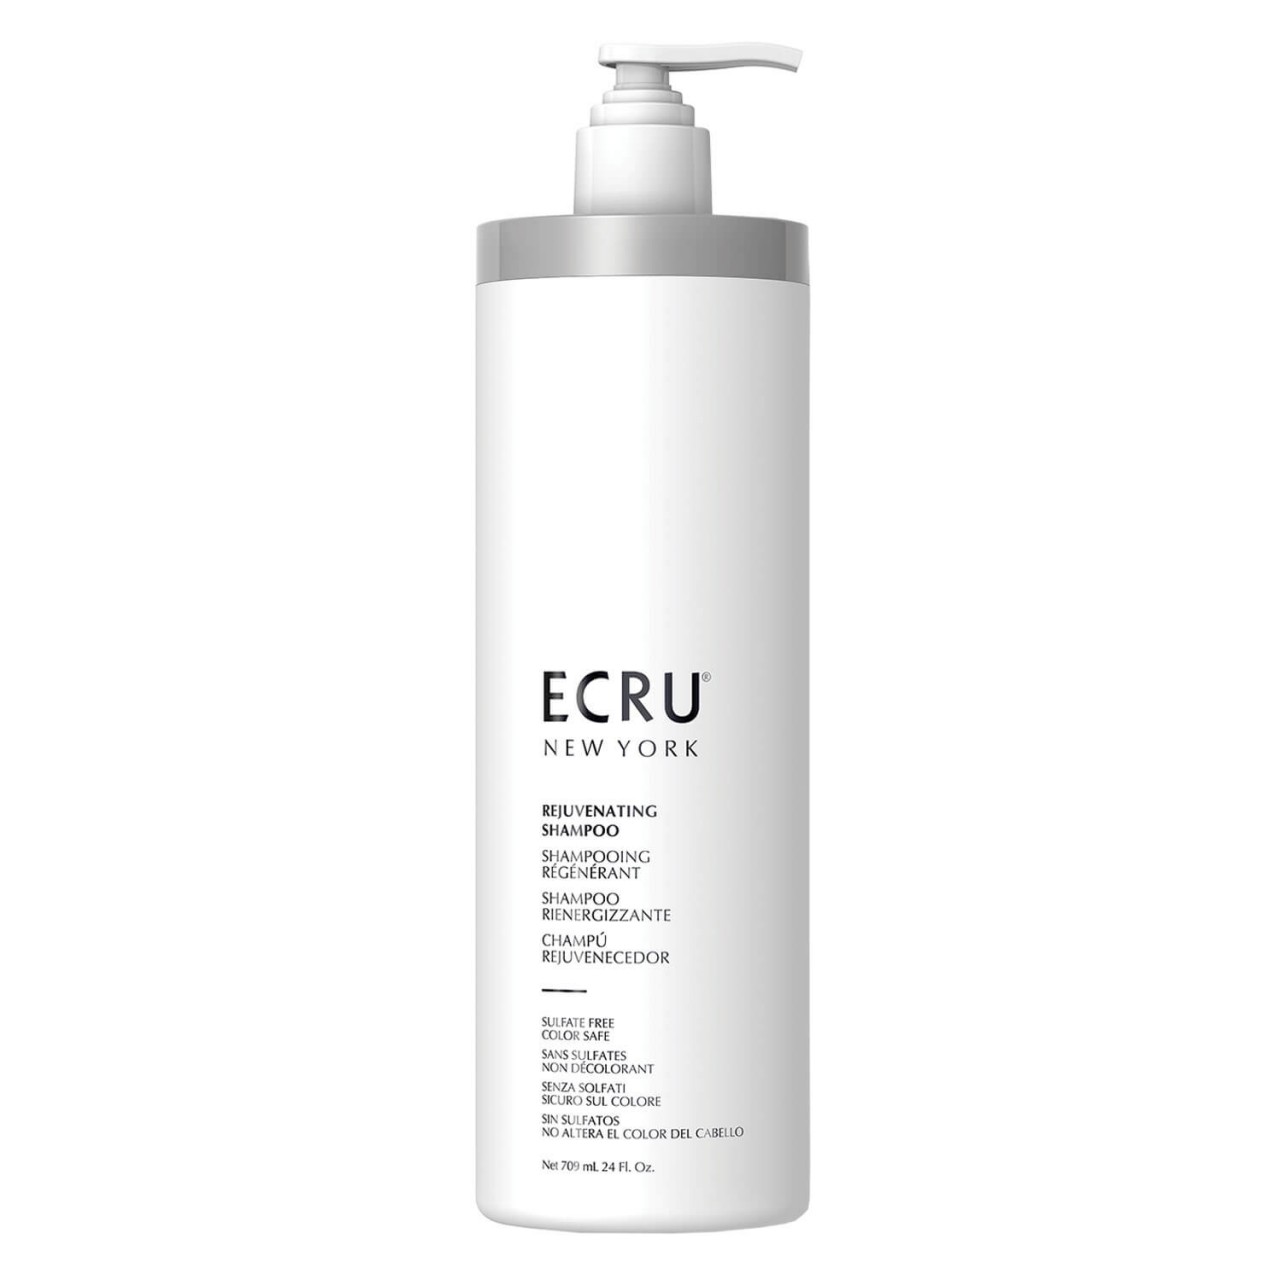 ECRU NY Signature - Rejuvenating Shampoo von Ecru New York